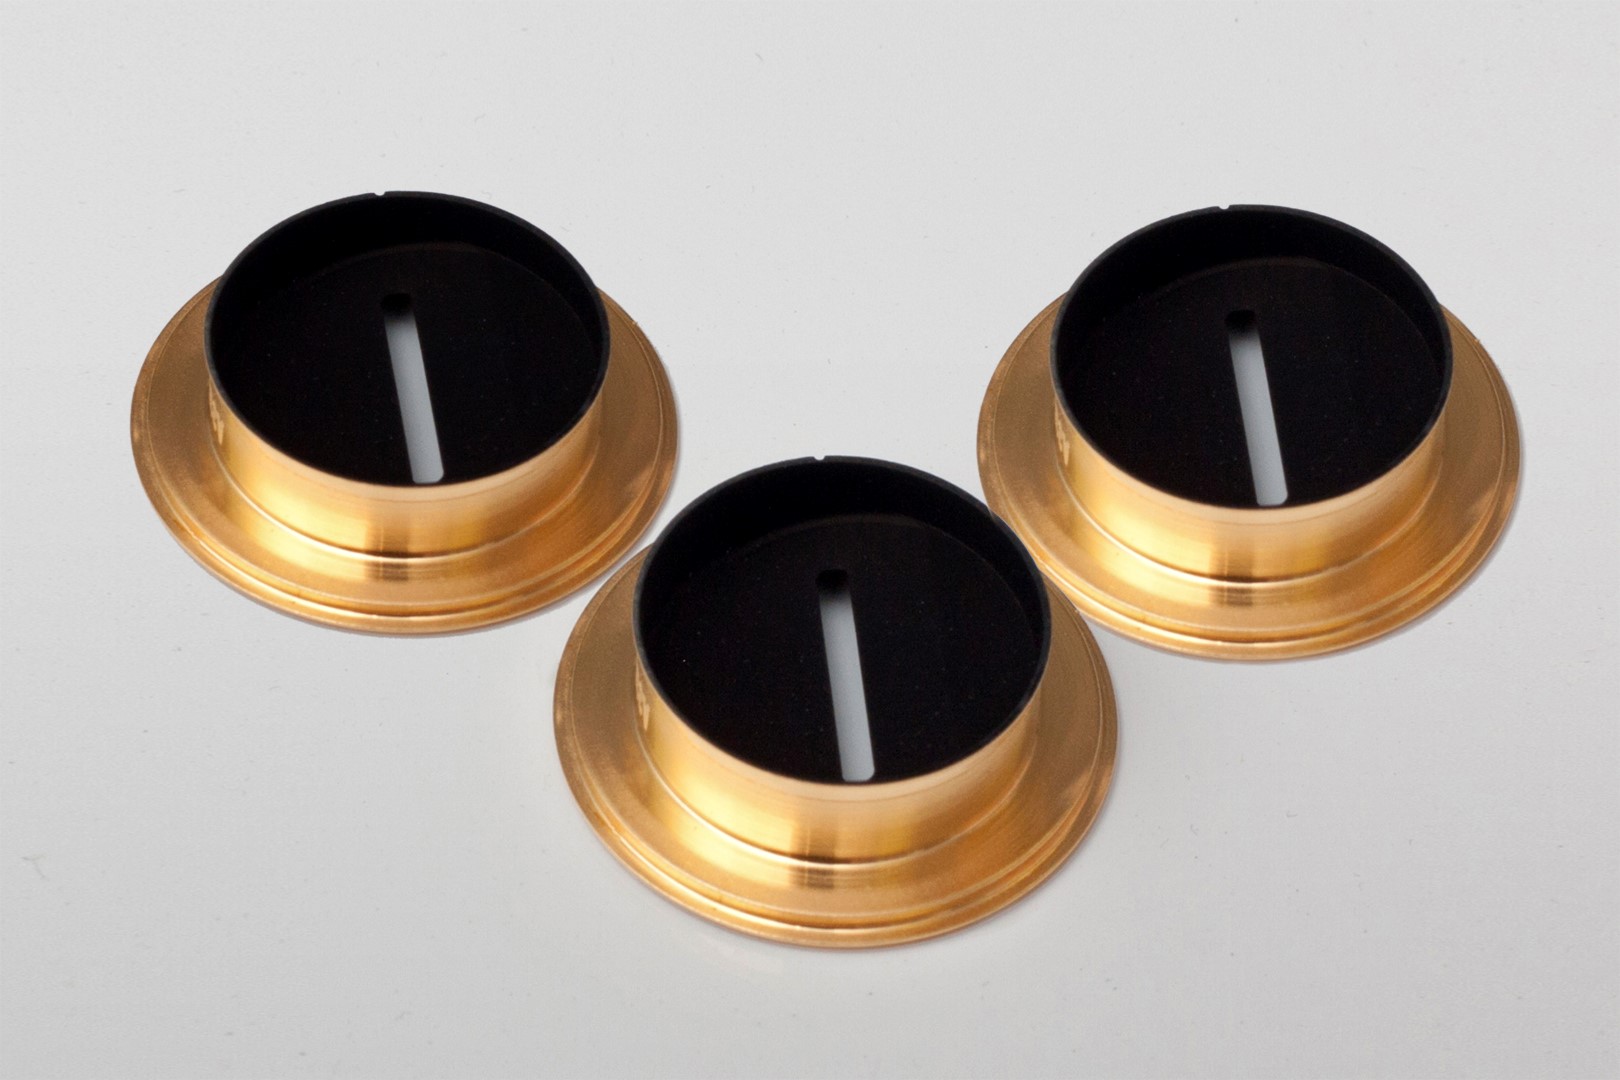 3 metallic circular components coated with acktar's magic black coating